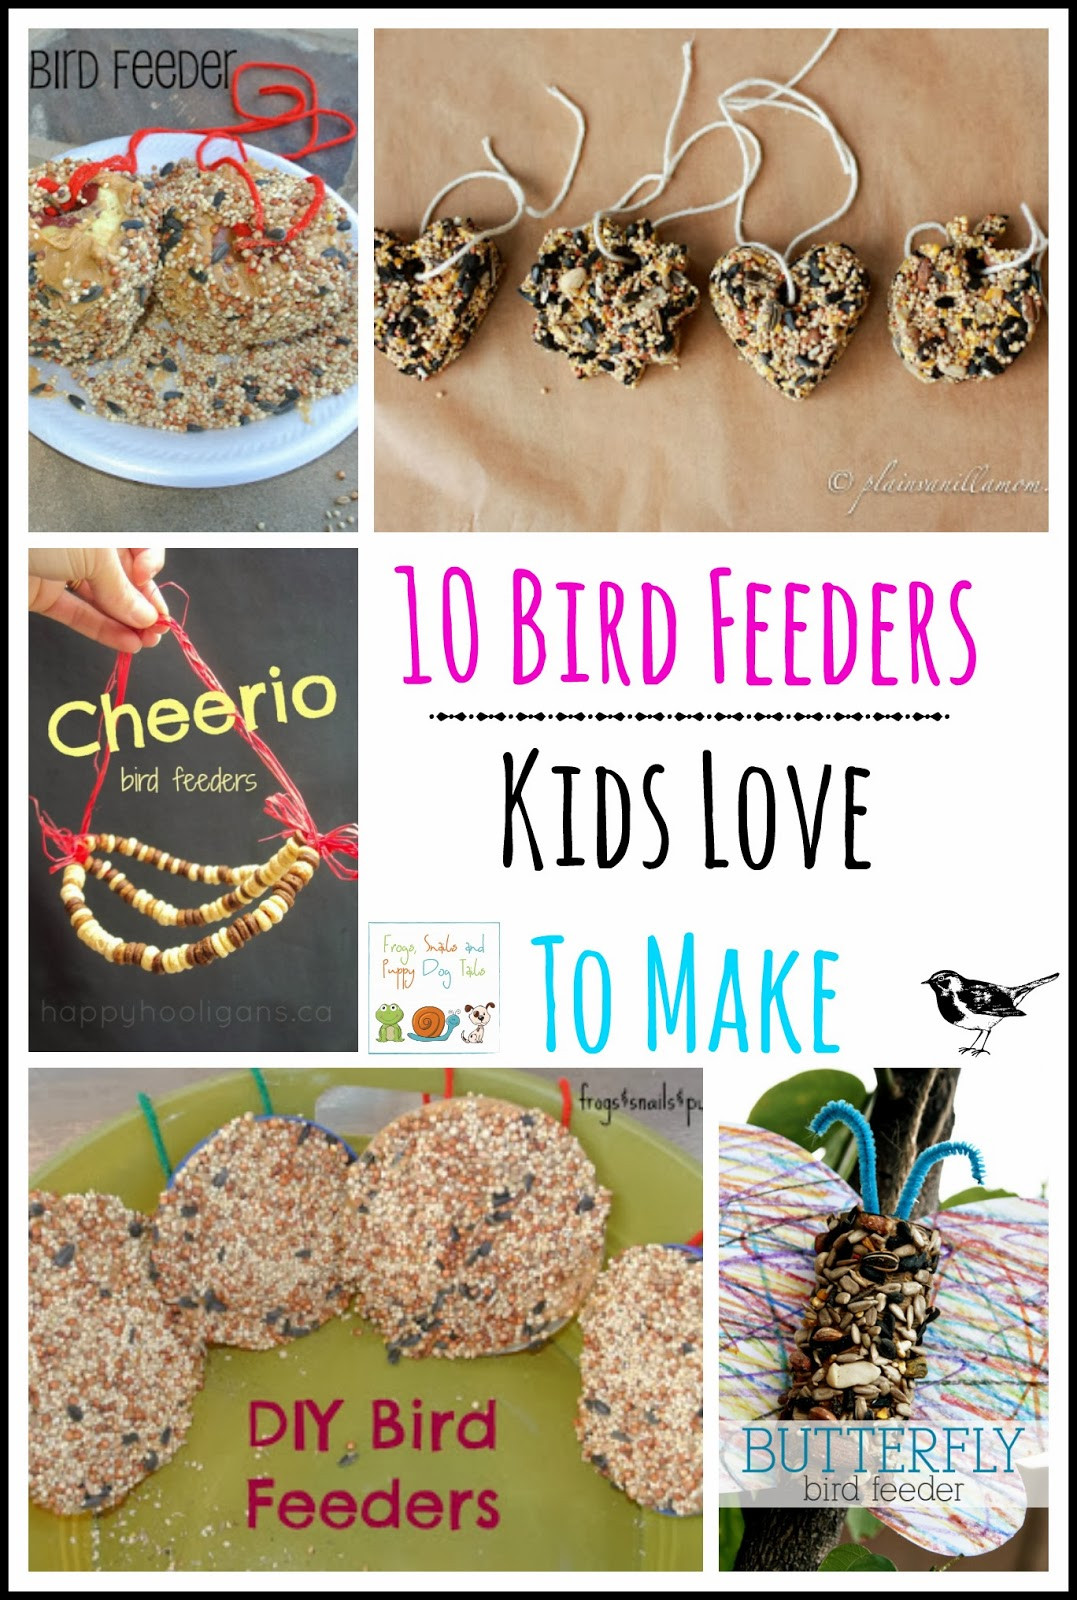 Best ideas about DIY Bird Feeder For Kids
. Save or Pin 10 Bird Feeders Kids Love To Make FSPDT Now.